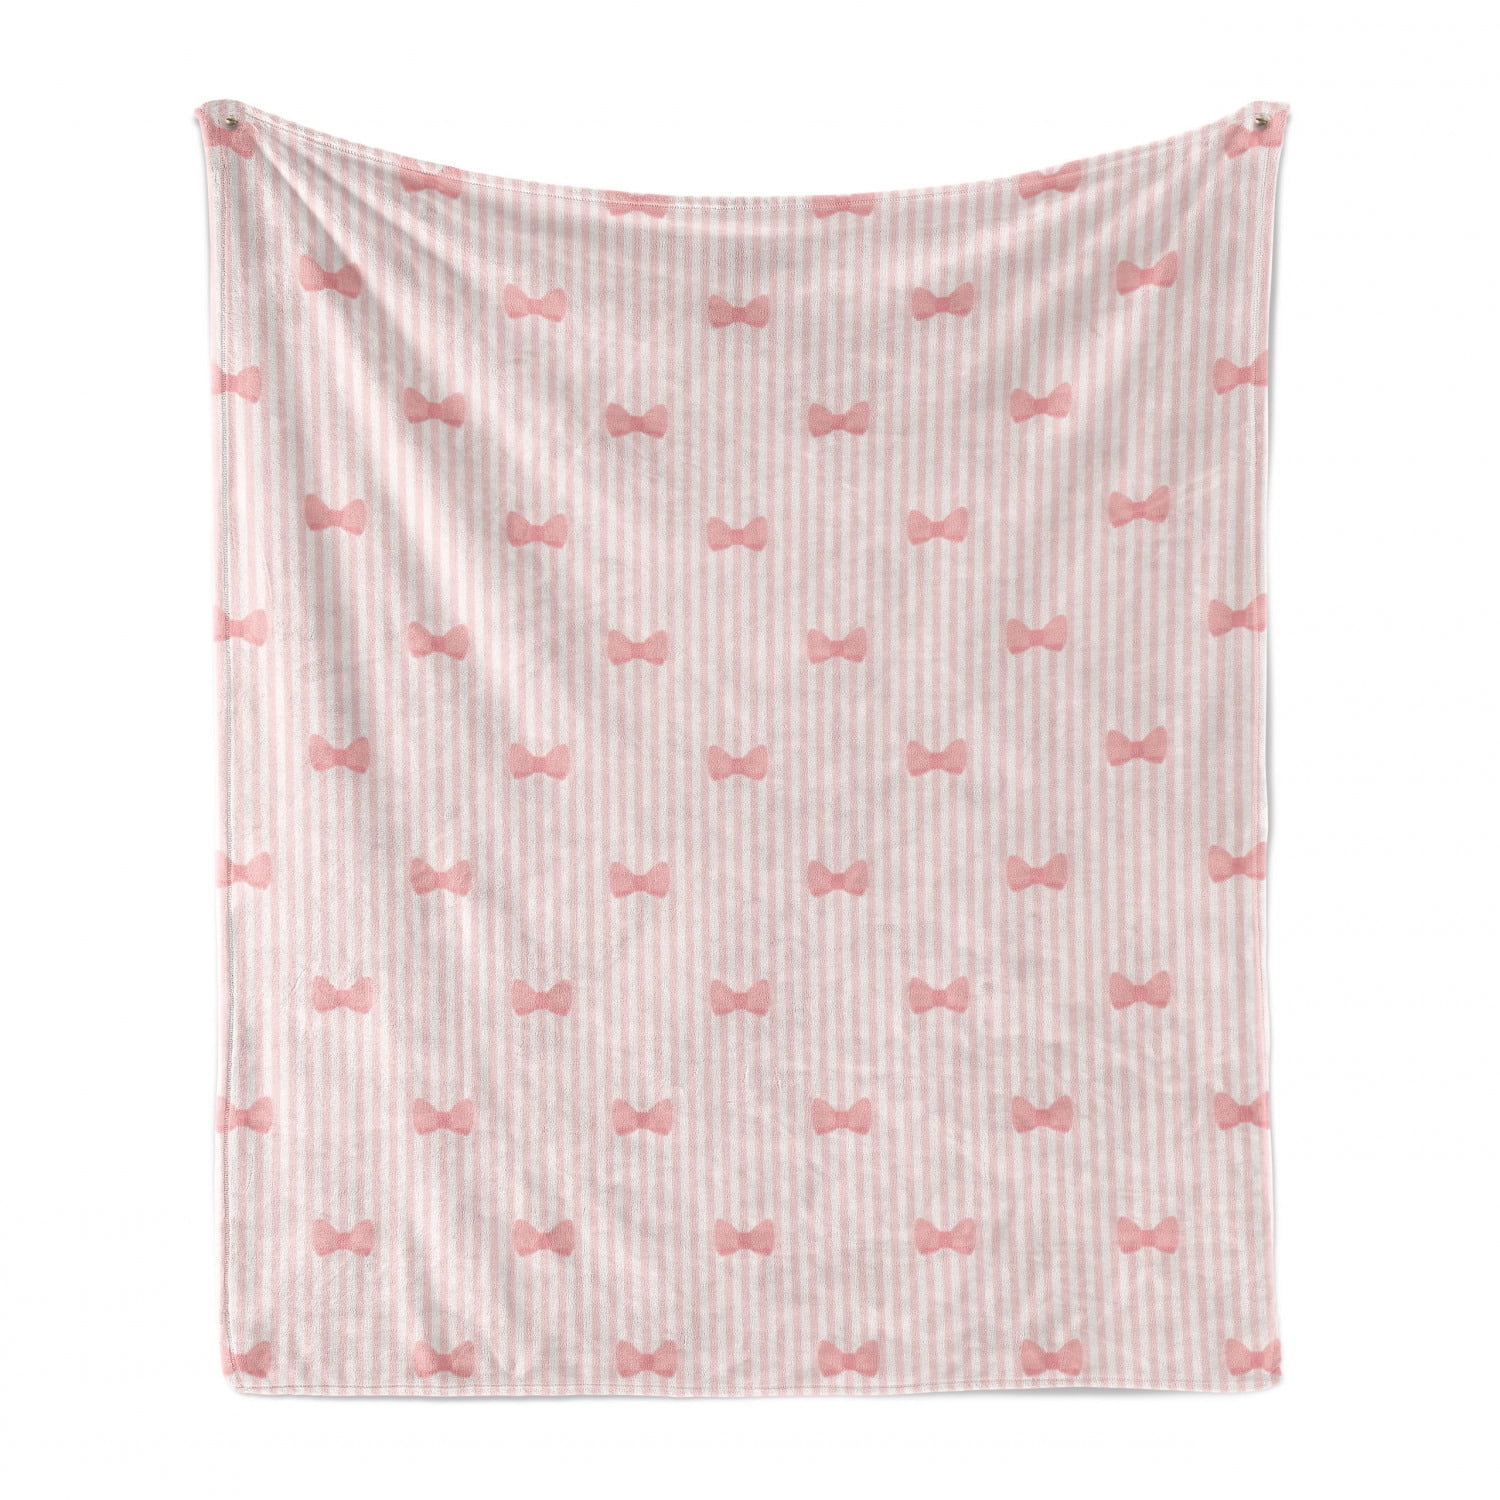 Fleece Throw/Blanket  New Cuddly Warm Soft Vintage Rose in Cream Pinks Aqua 